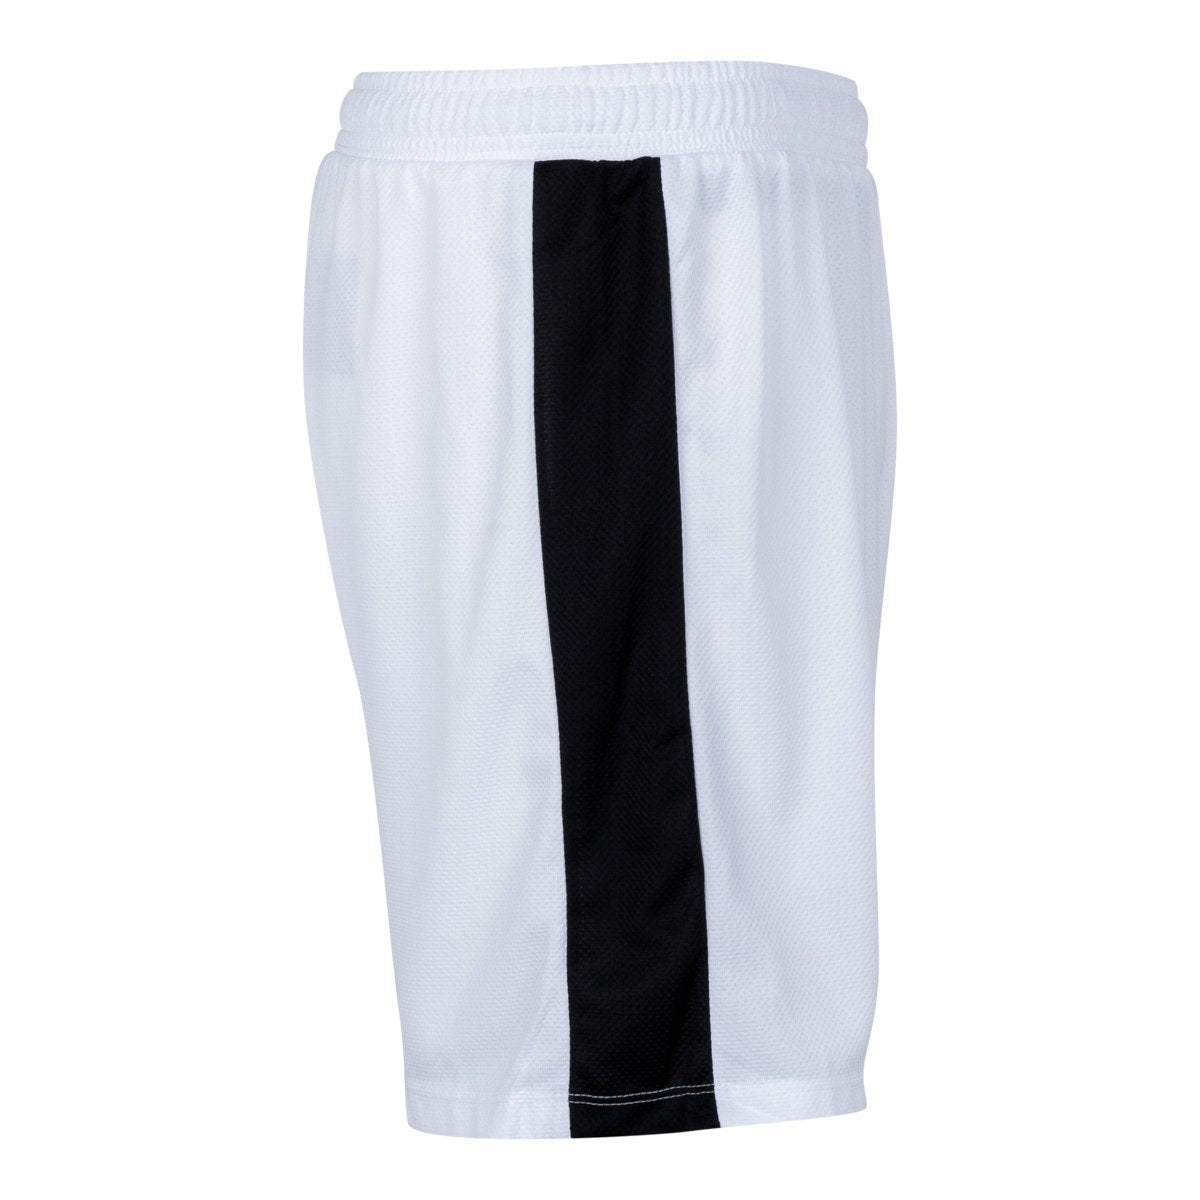 Pantalones cortes Basket Calusa Blanco Mujer - Imagen 3